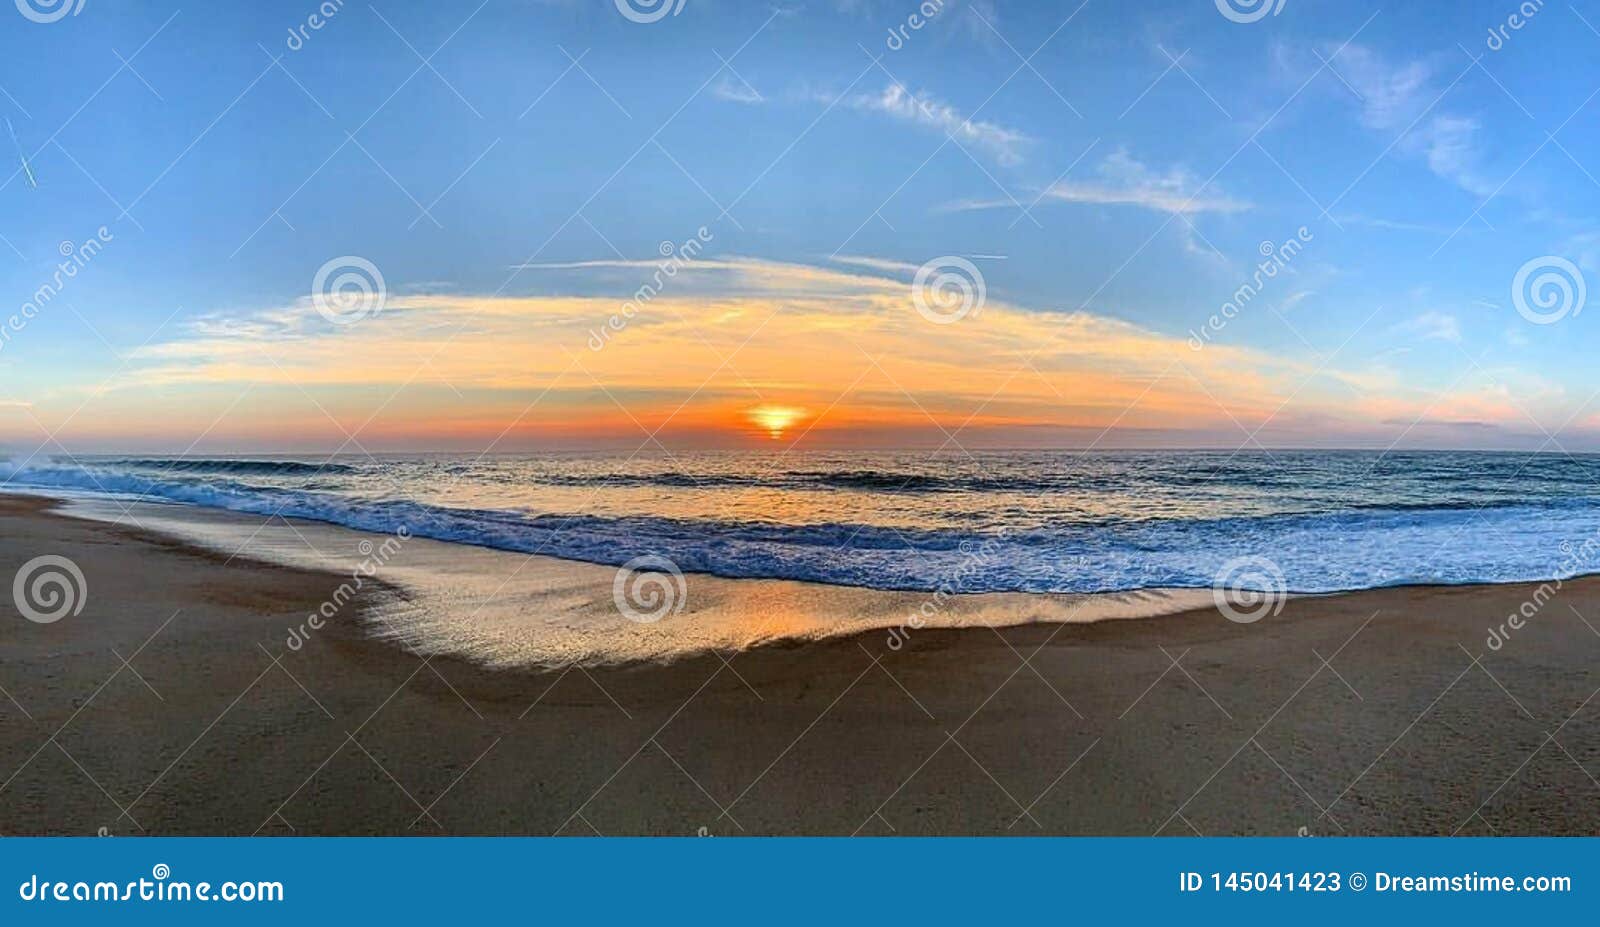 sunrises sunsets in a ocean